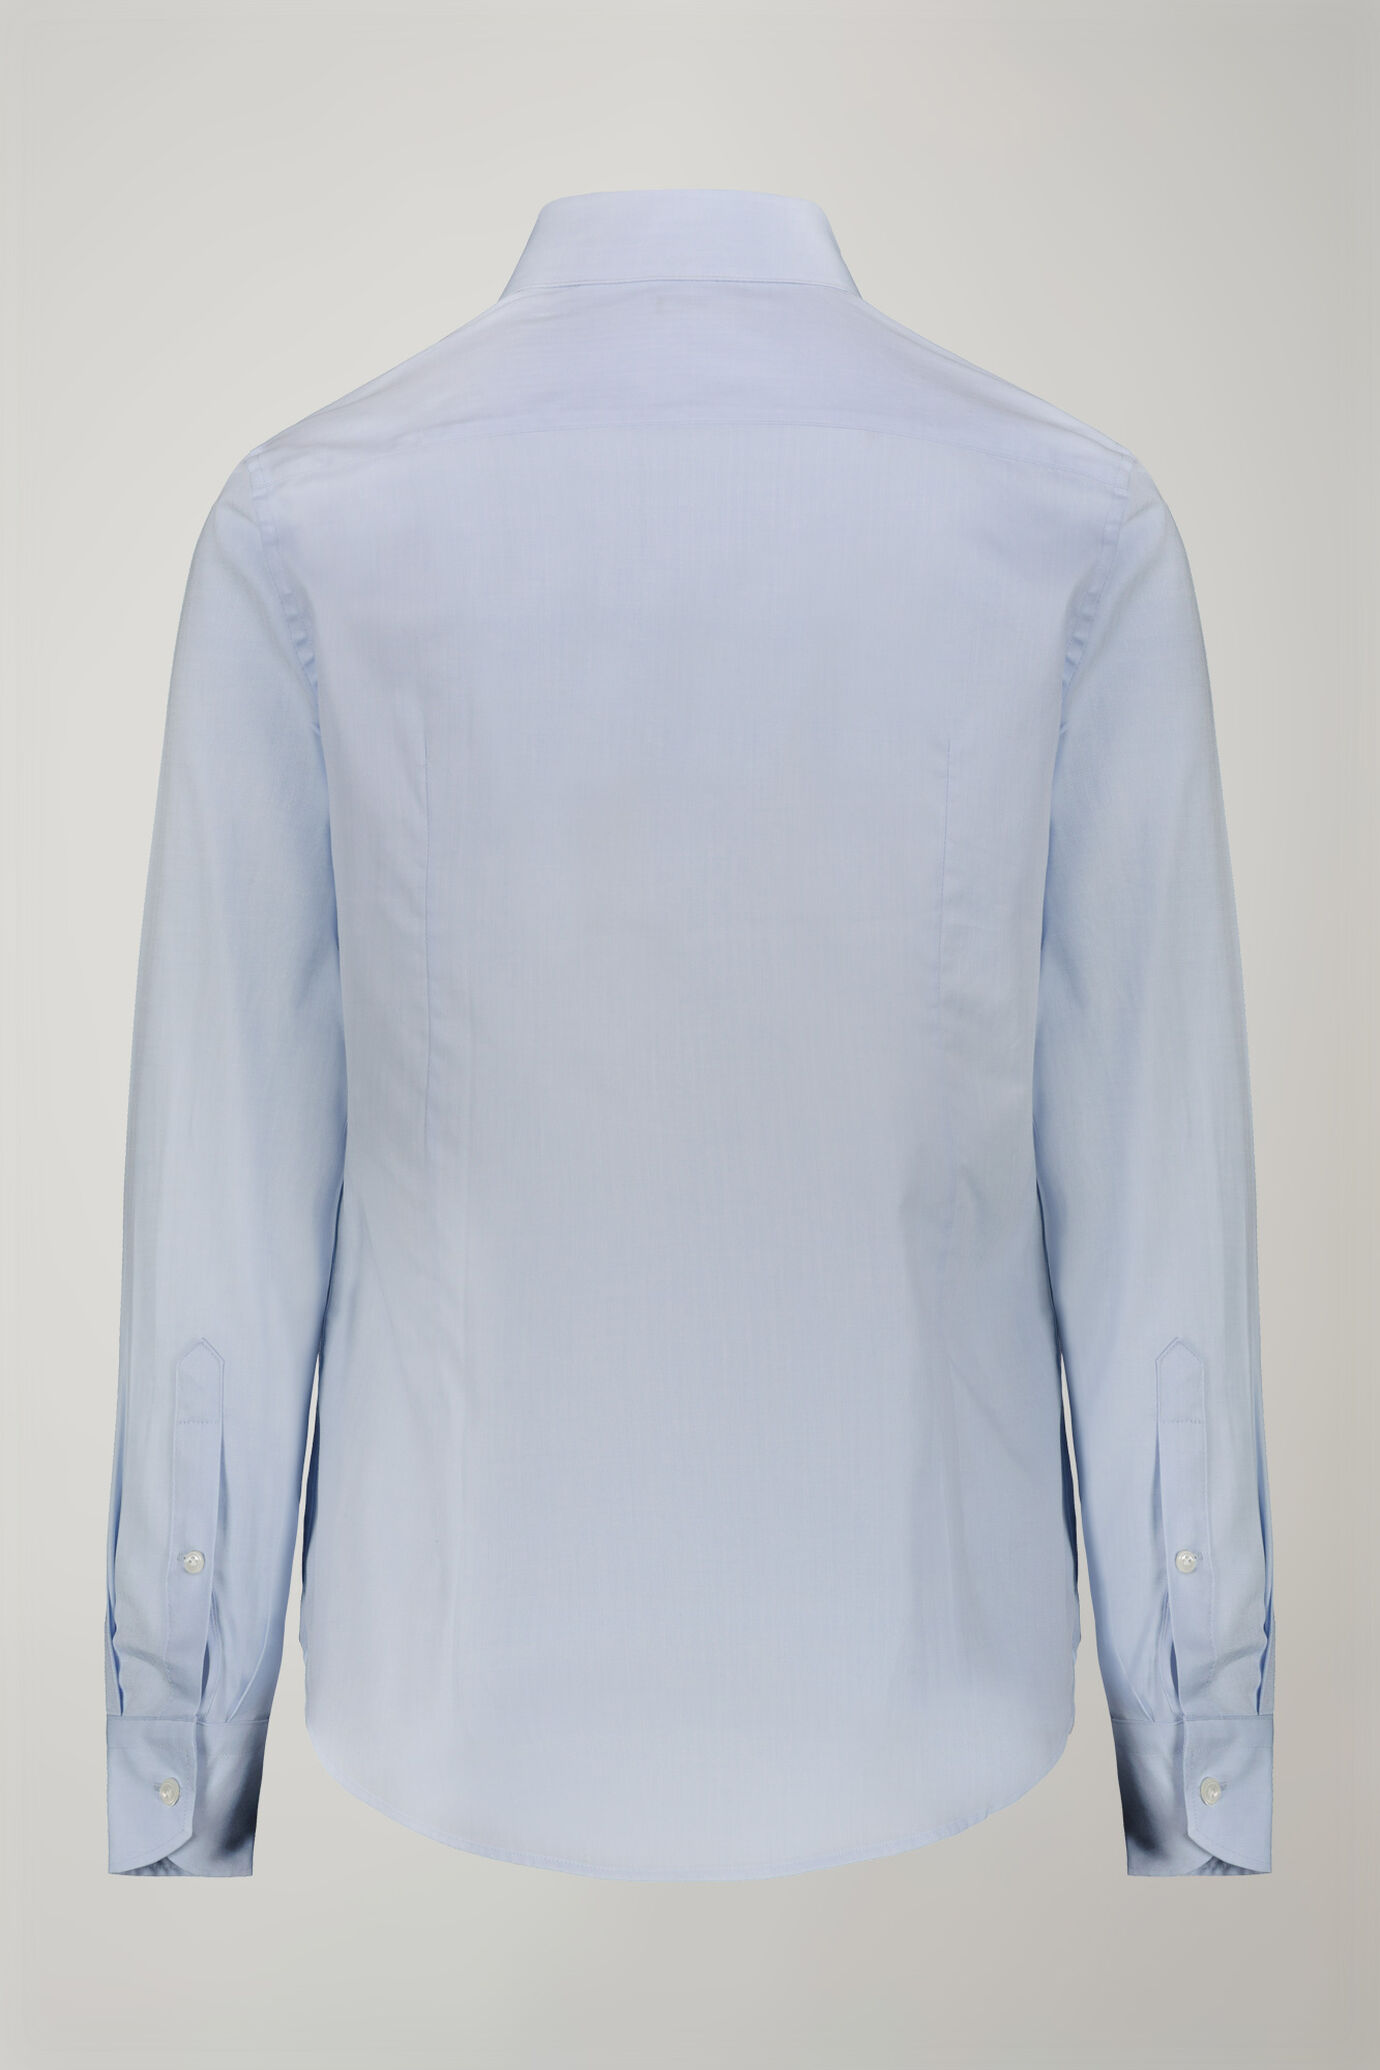 Men's shirt classic collar 100% cotton herringbone fabric plain regular fit image number 6